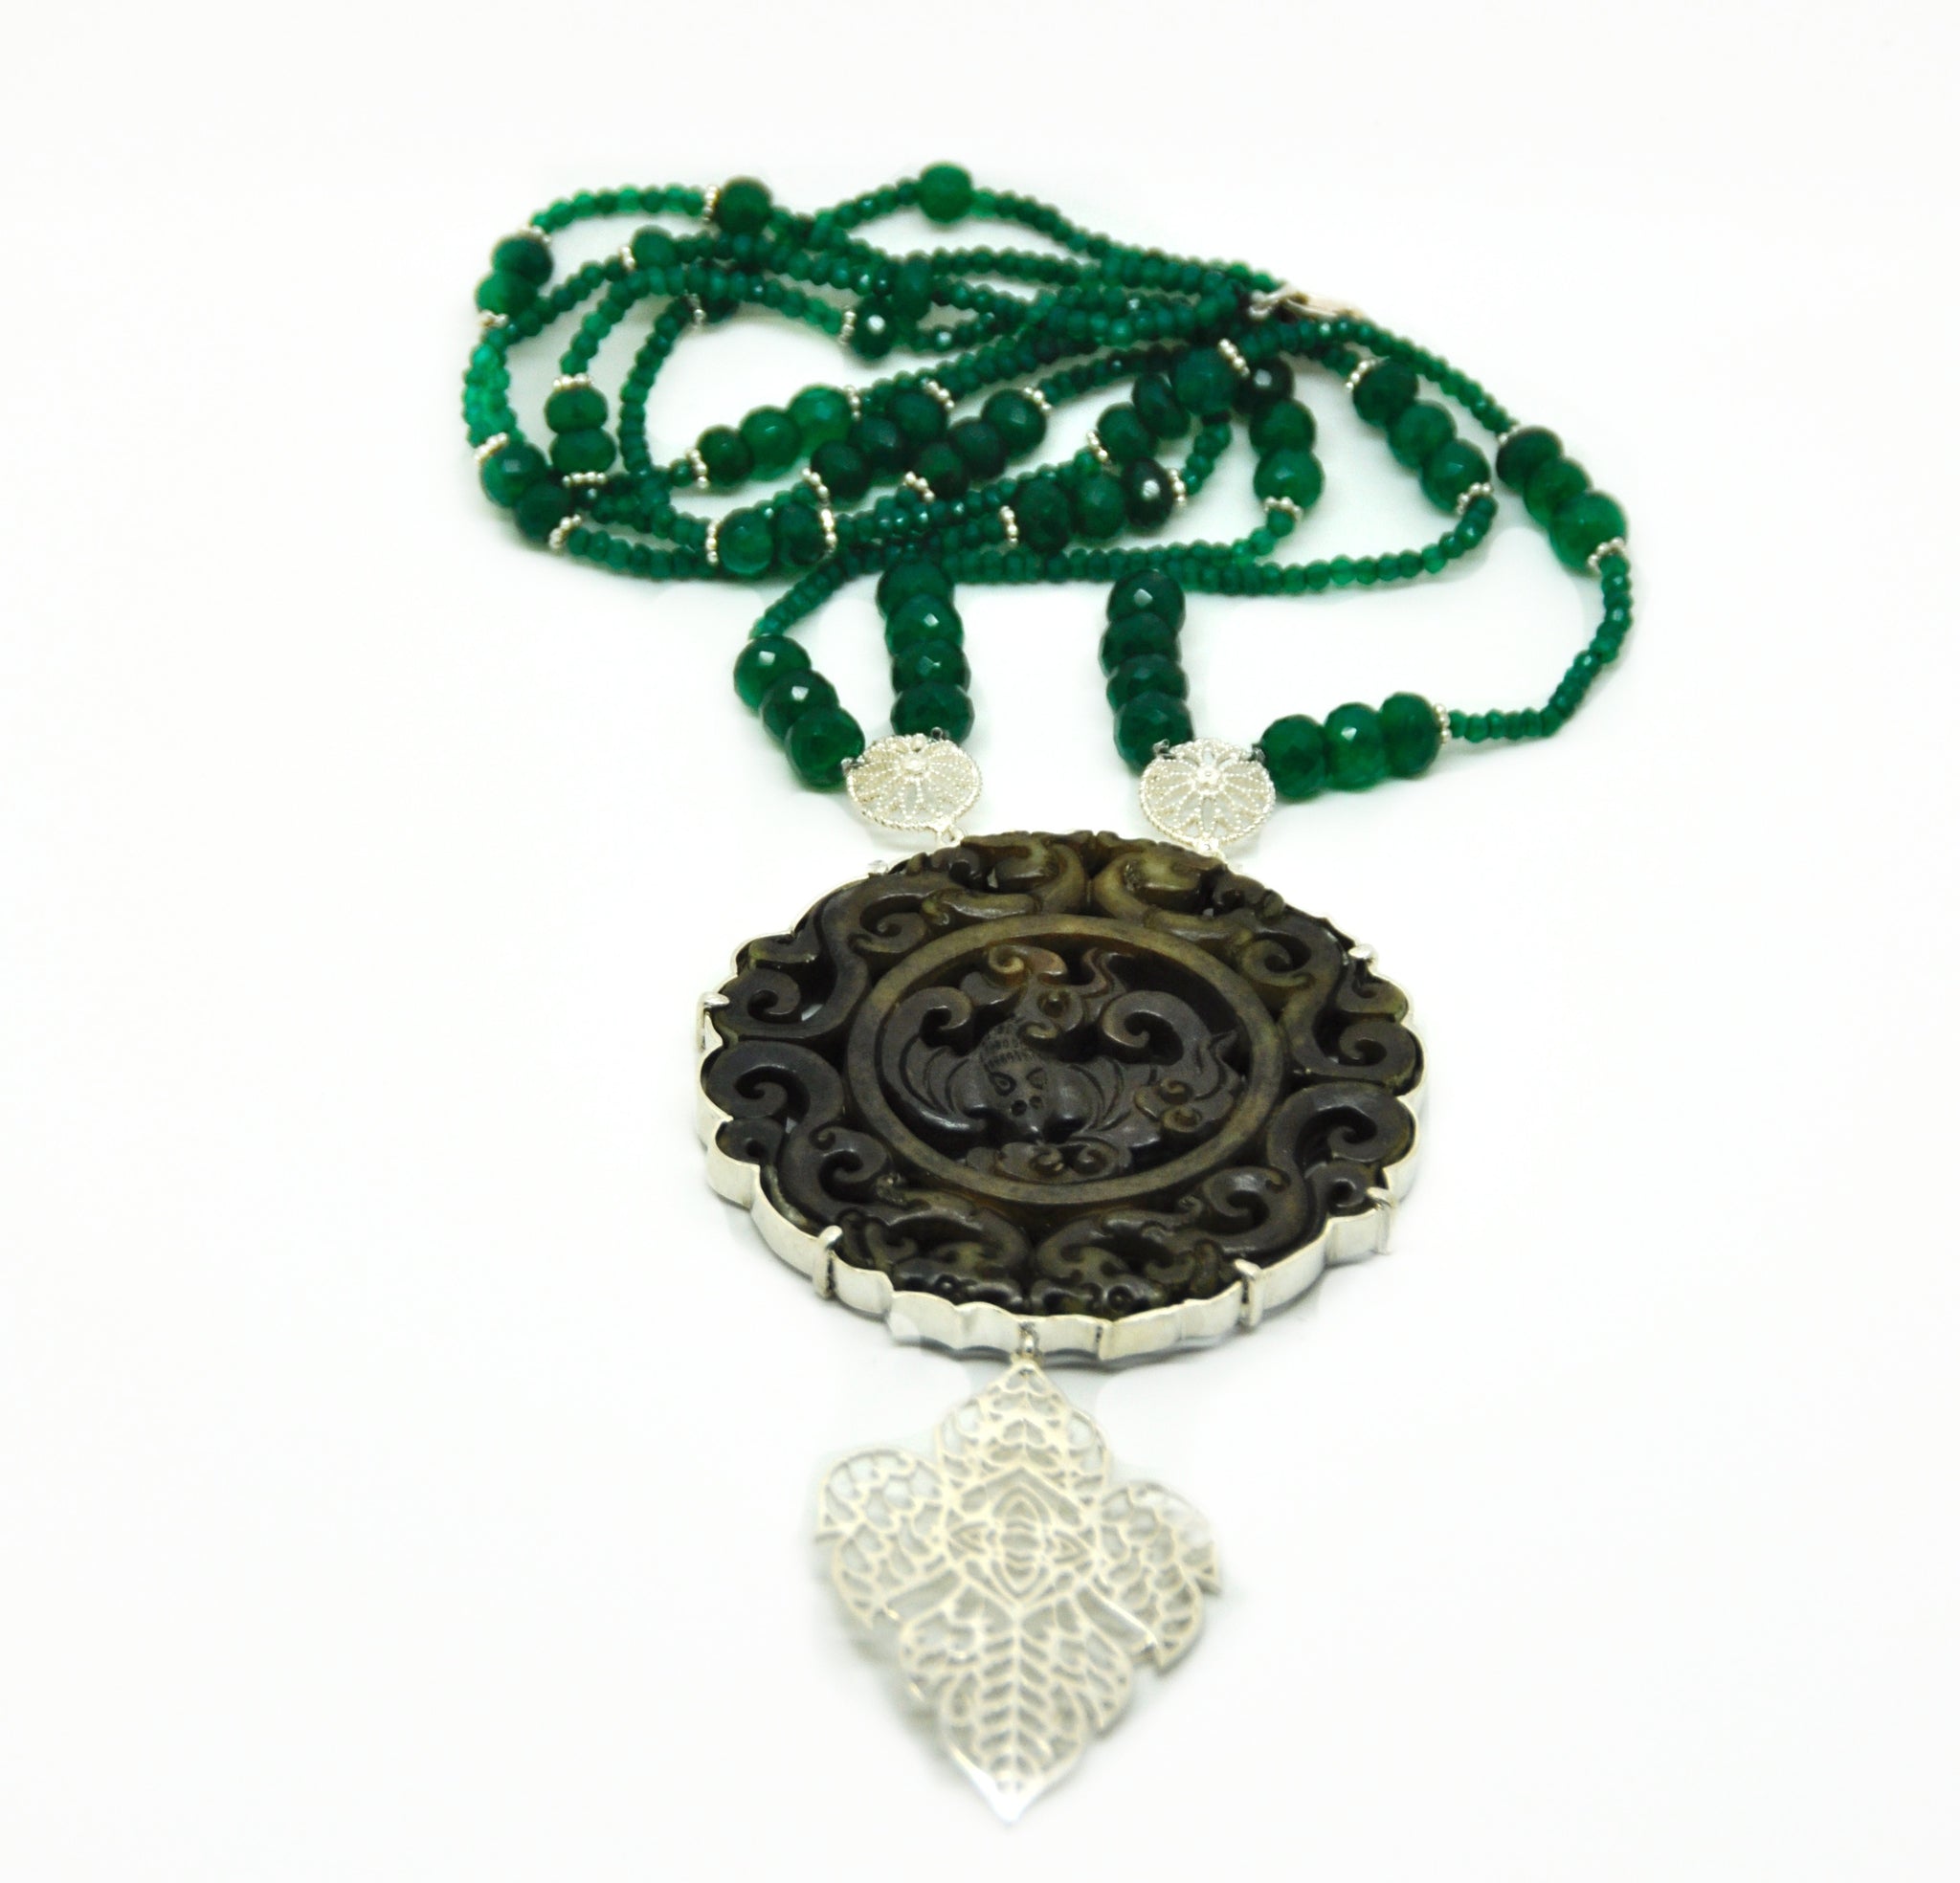 SOLD - NEW Carved Jade necklace